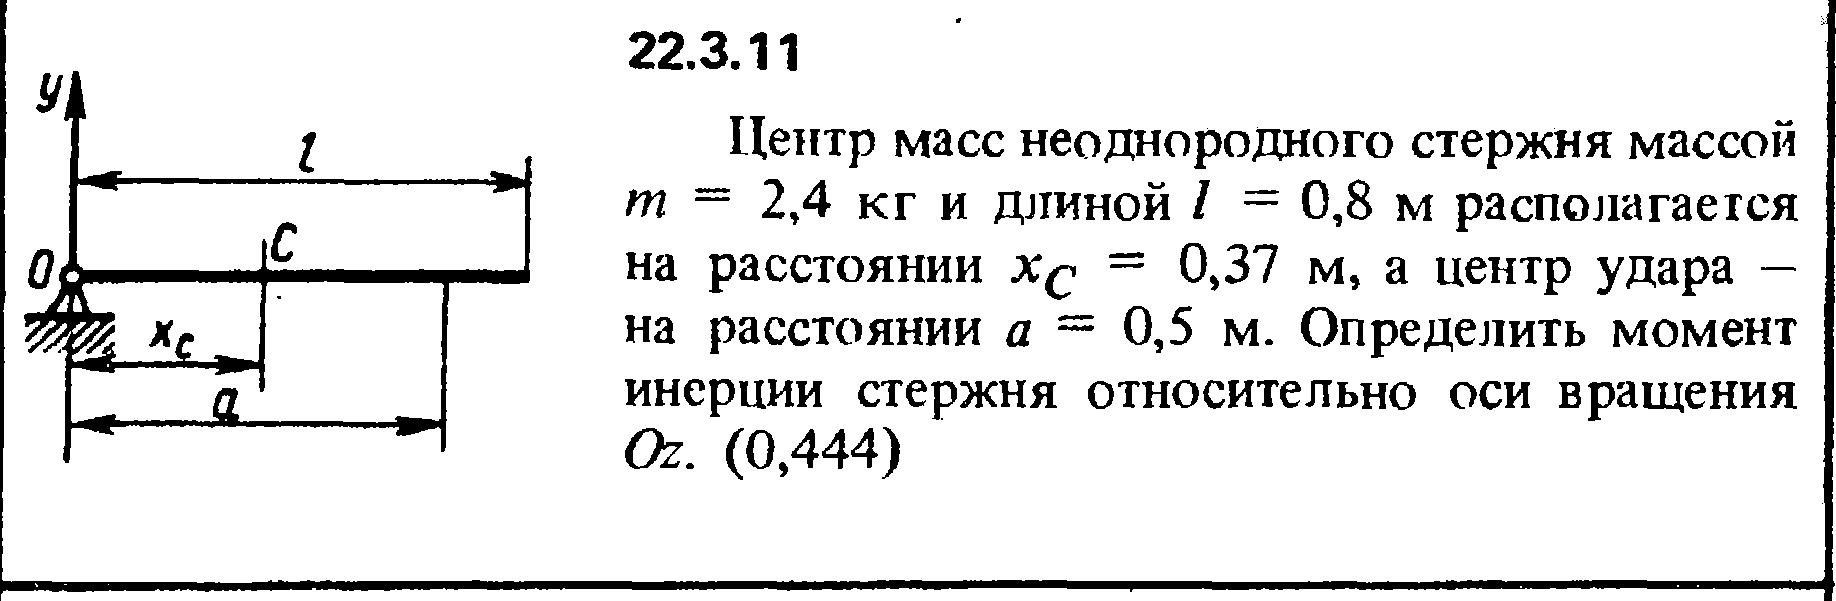 Решение 22.3.11 из сборника (решебника) Кепе О.Е. 1989